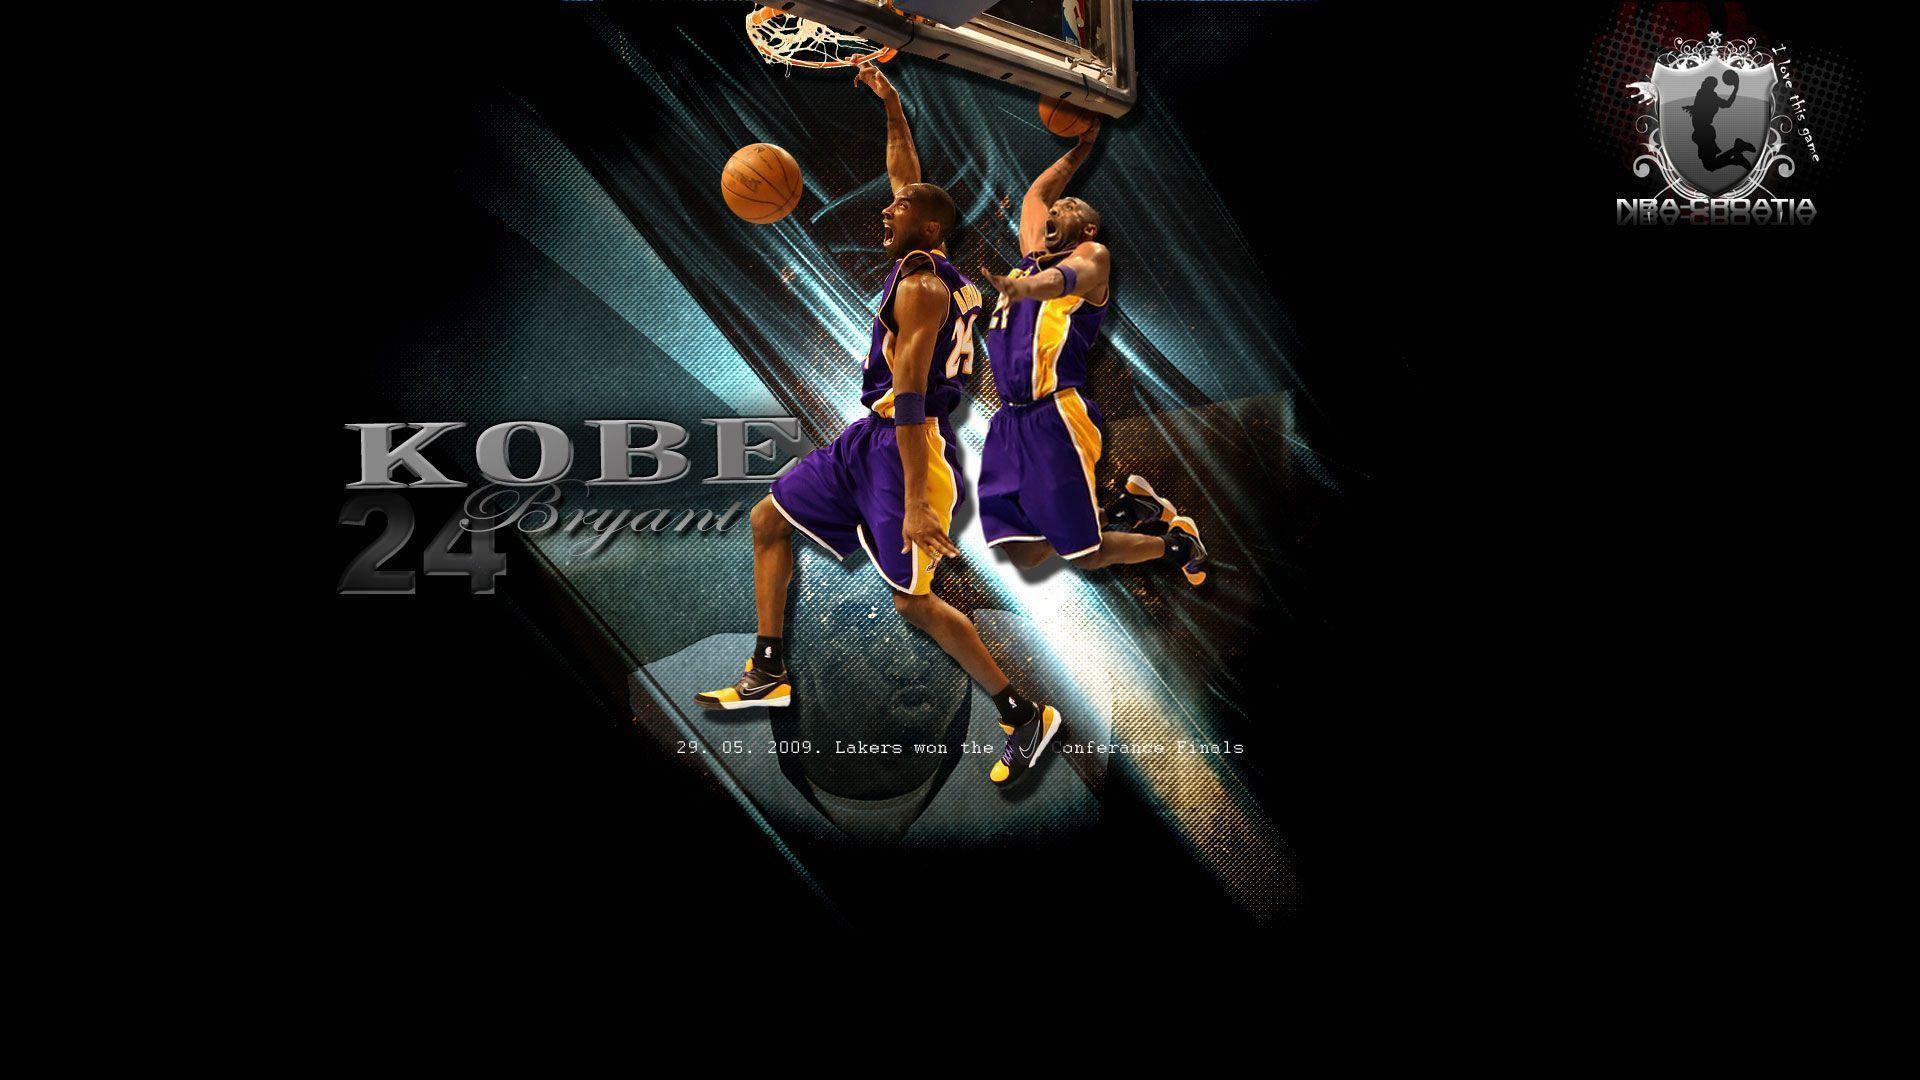 Los Angeles Lakers Wallpaper at BasketWallpaper